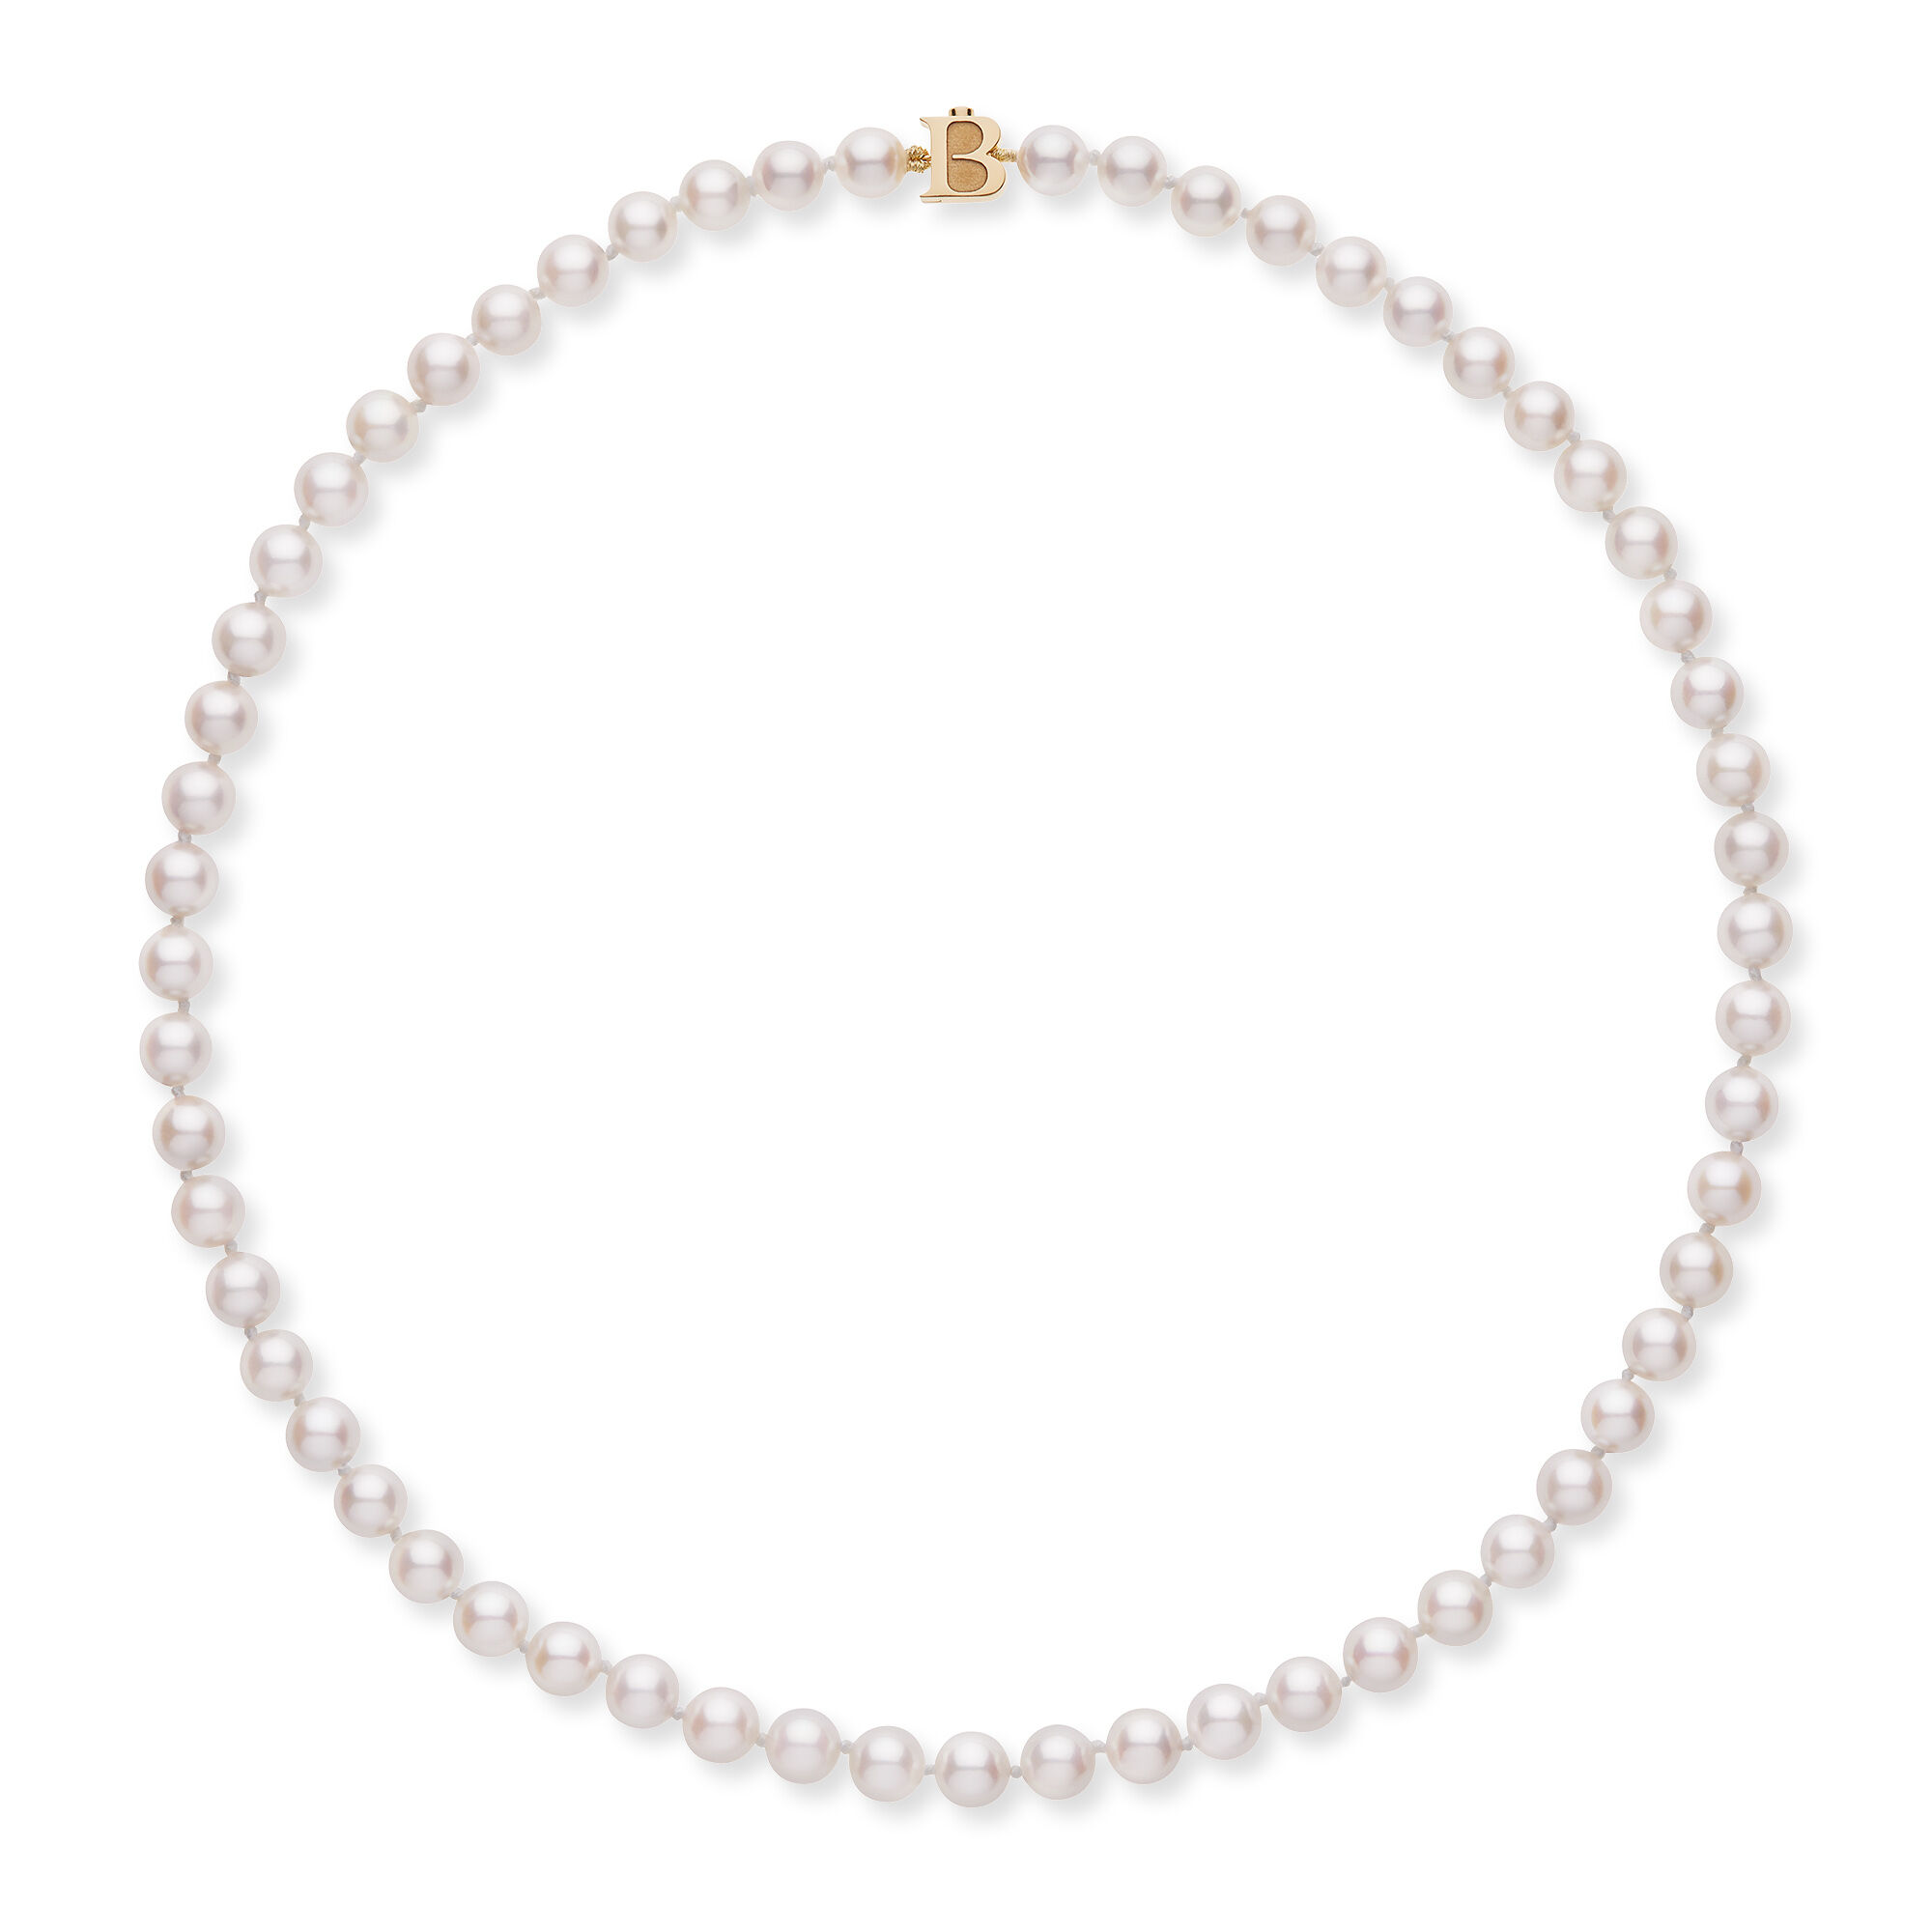 COMPETE99% Original Pearl Necklace